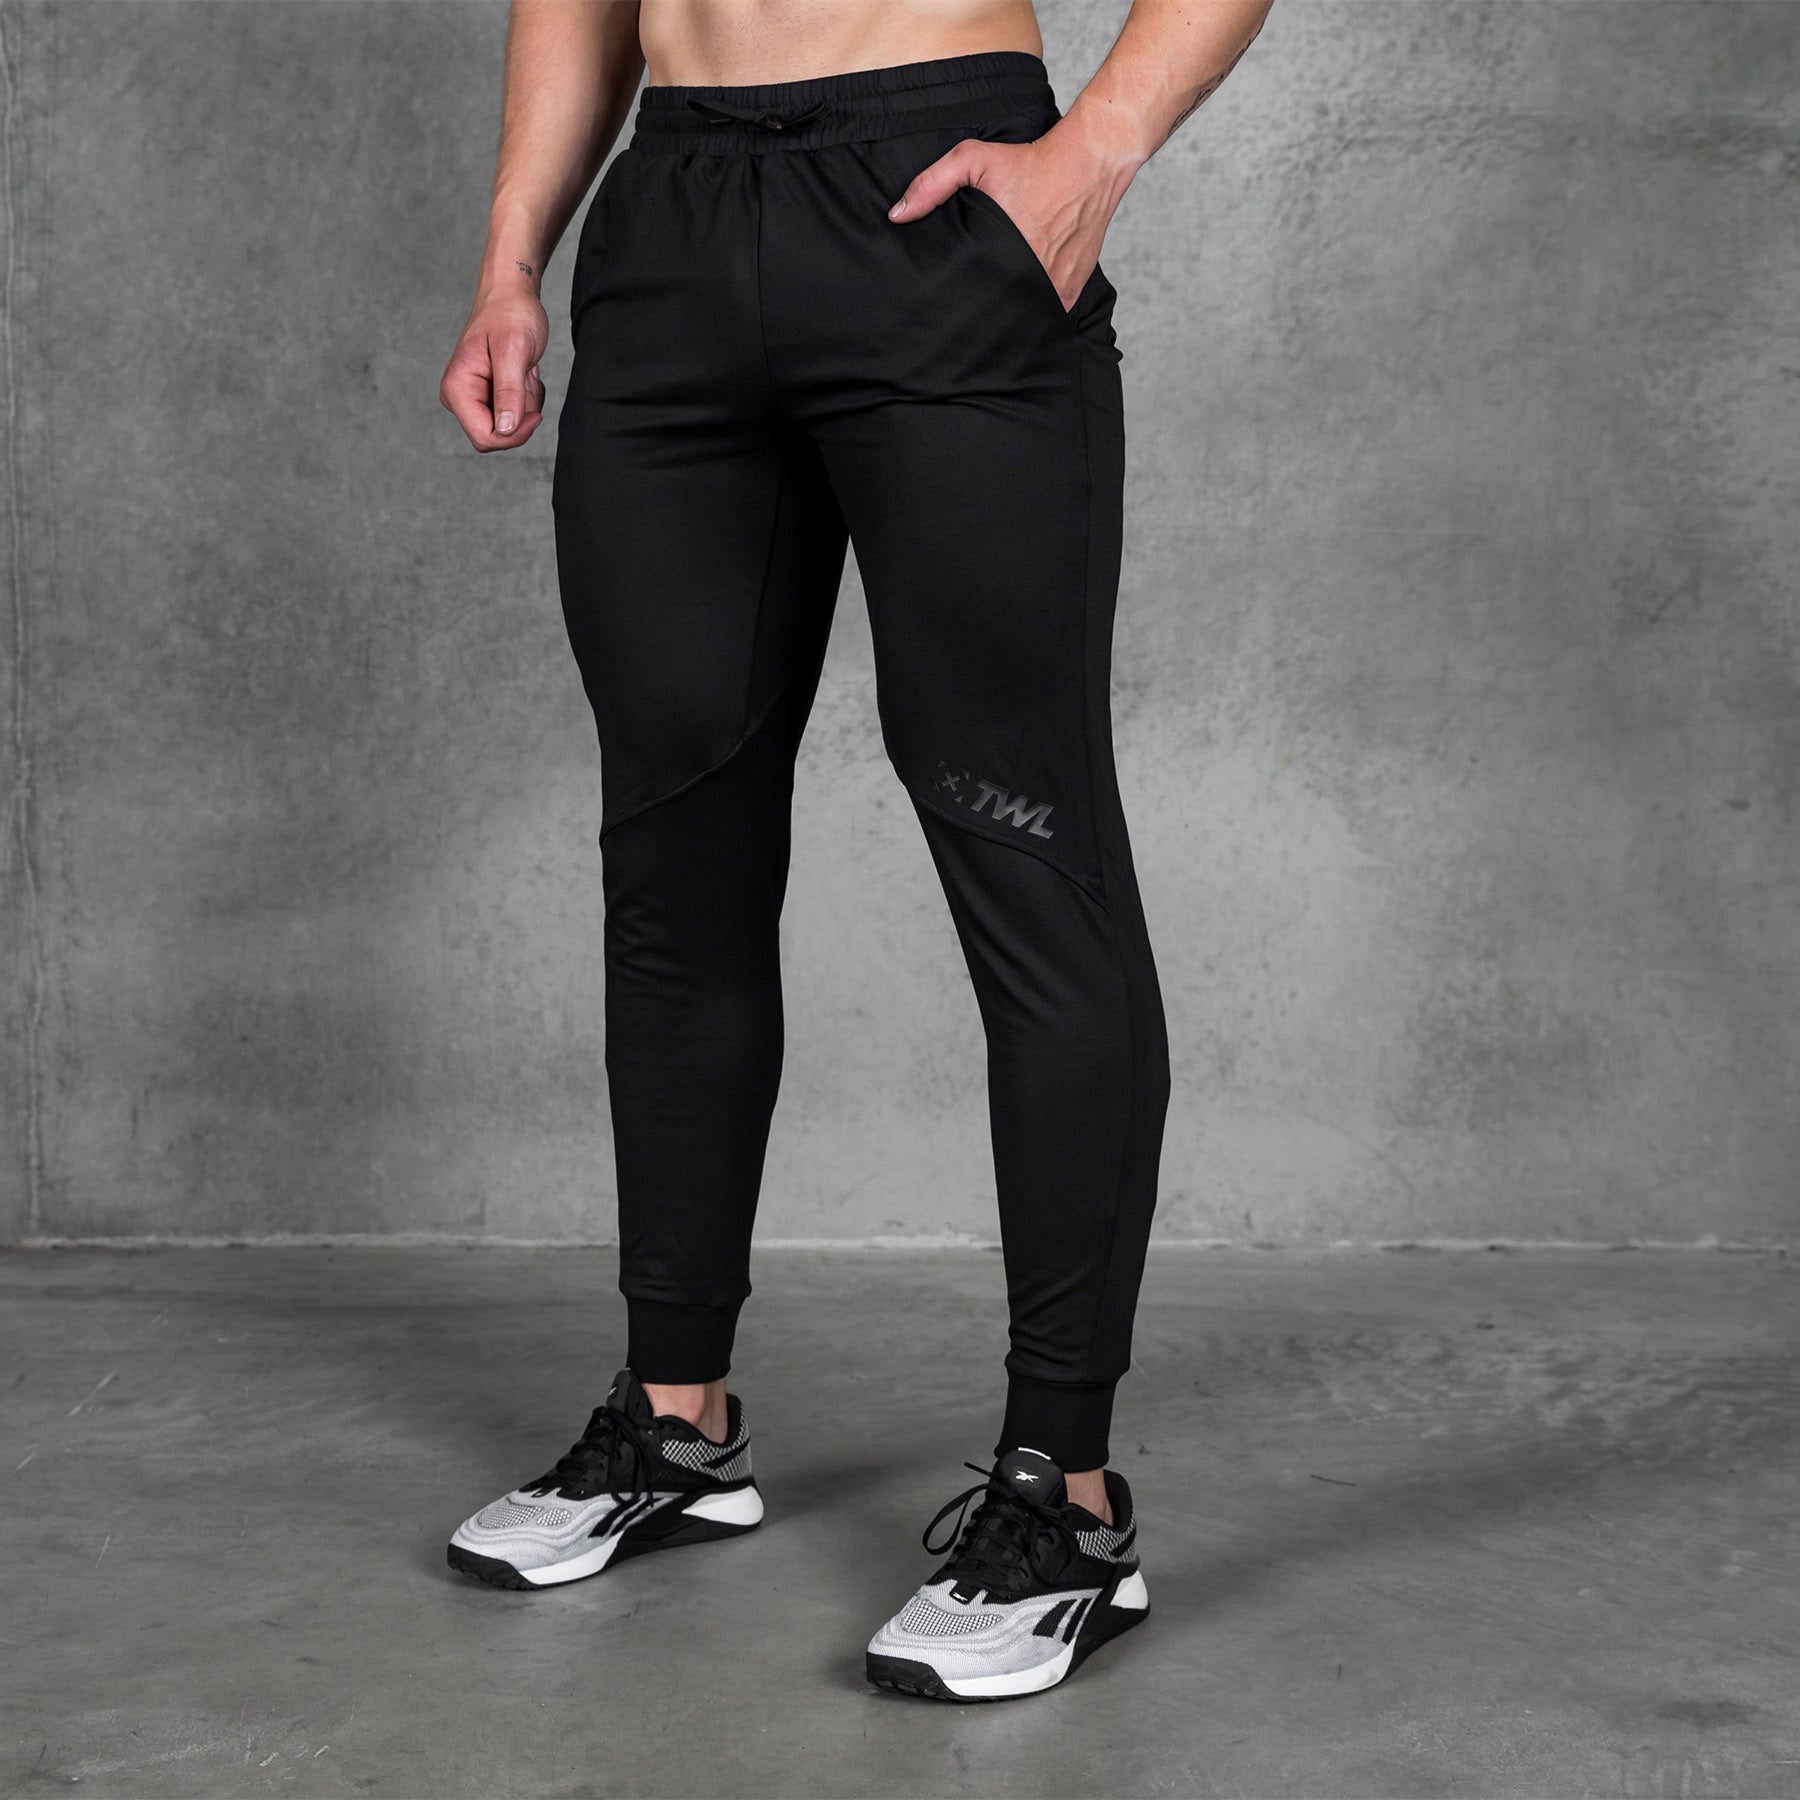 Gym Track Pants For Men - Buy Gym Track Pants For Men online in India